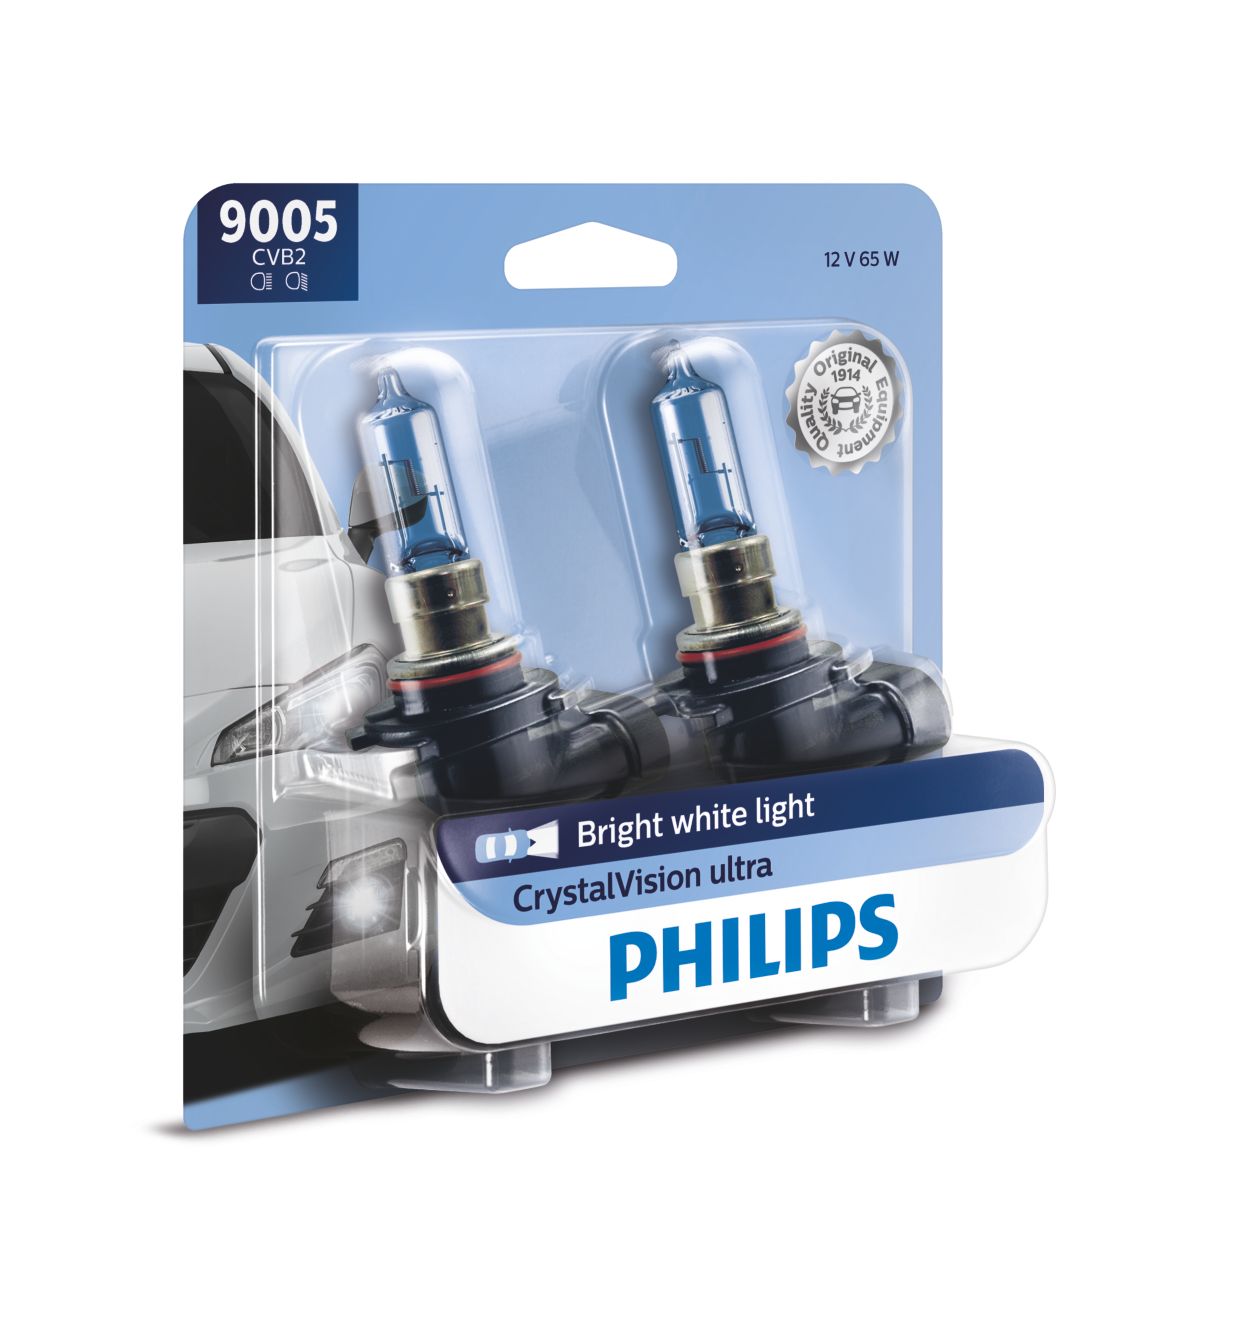 9005 Philips 9005CVPS2 CrystalVision Platinum Halogen Bulbs – HID